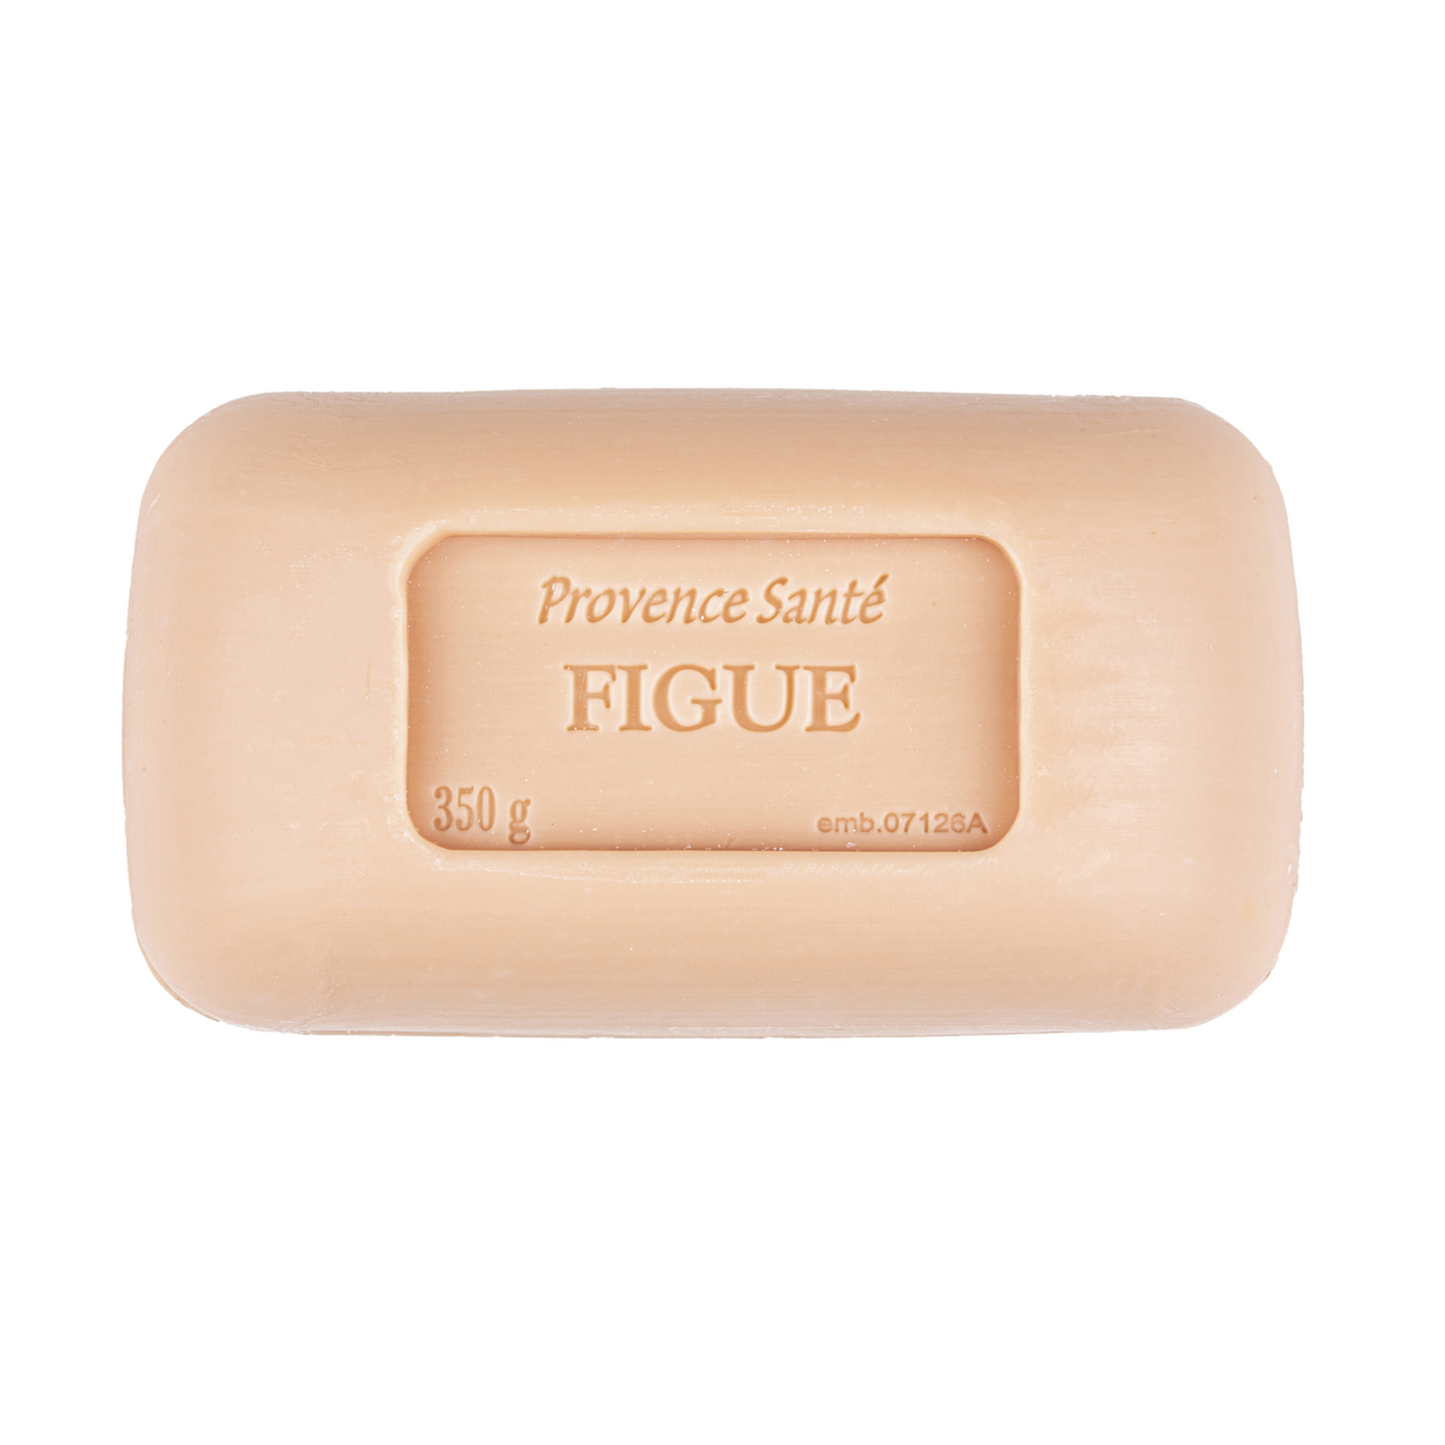 Primary Image of Provence Sante Fig Big Bar Soap (12 oz) 